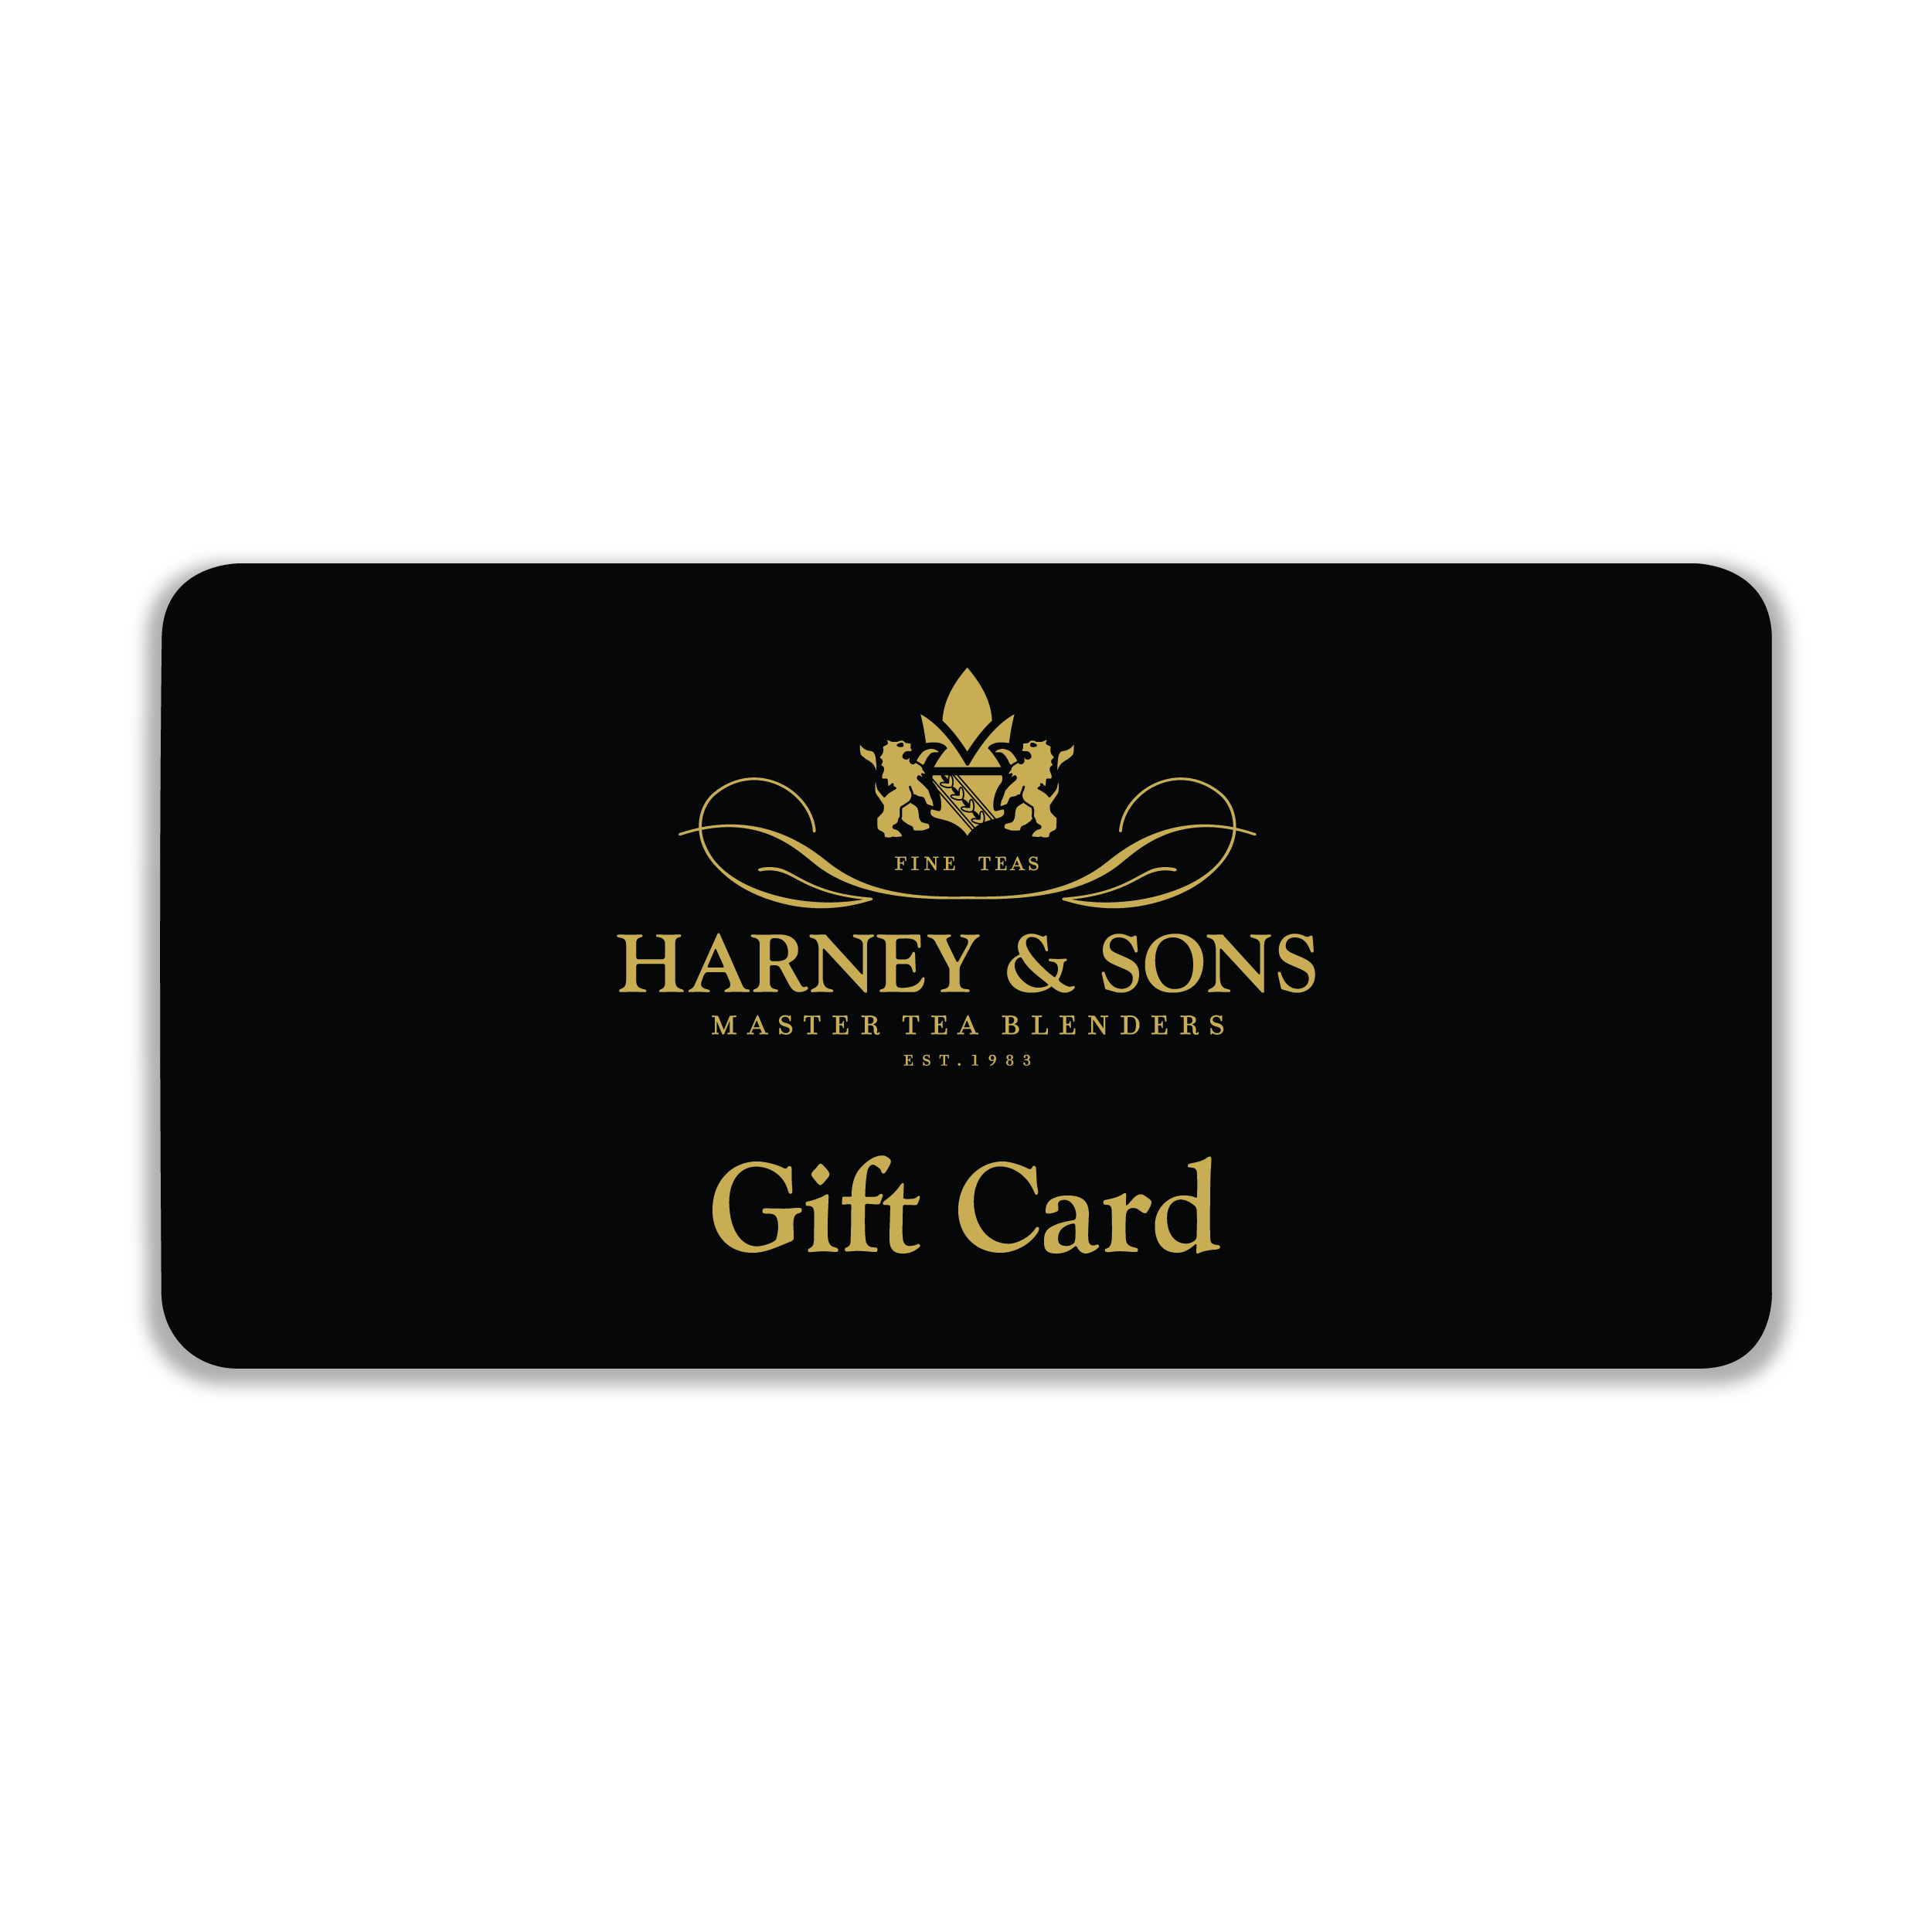 Harney & Sons Digital Gift Card - Harney & Sons Fine Teas